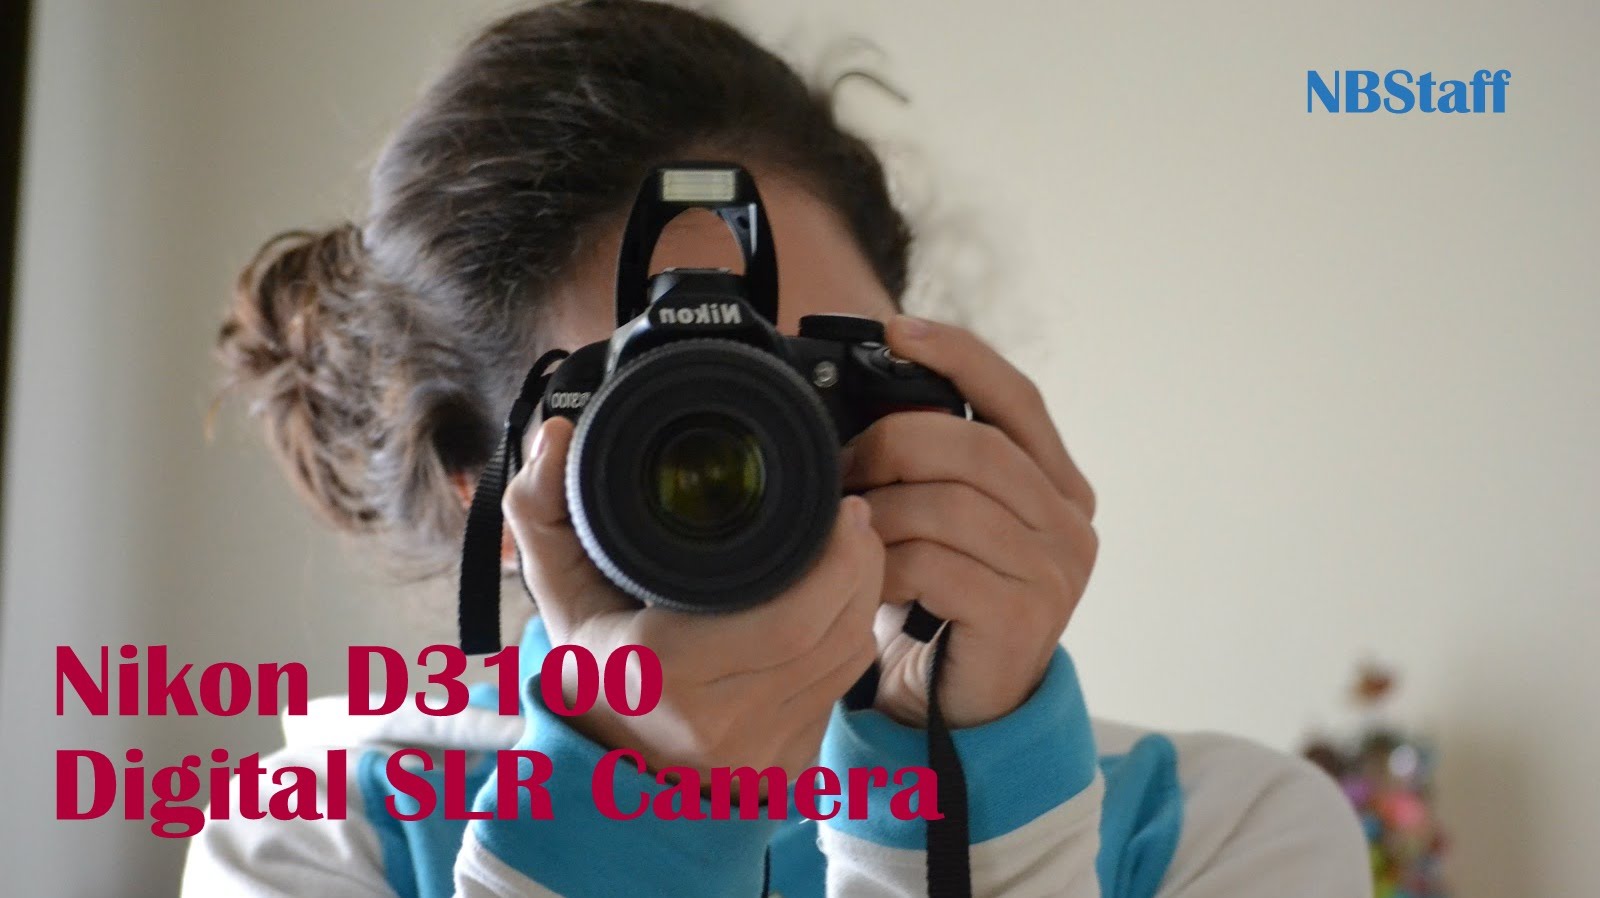 Nikon D3100 DSLR Camera – Best Entry Level Digital SLR Camera by Nikon